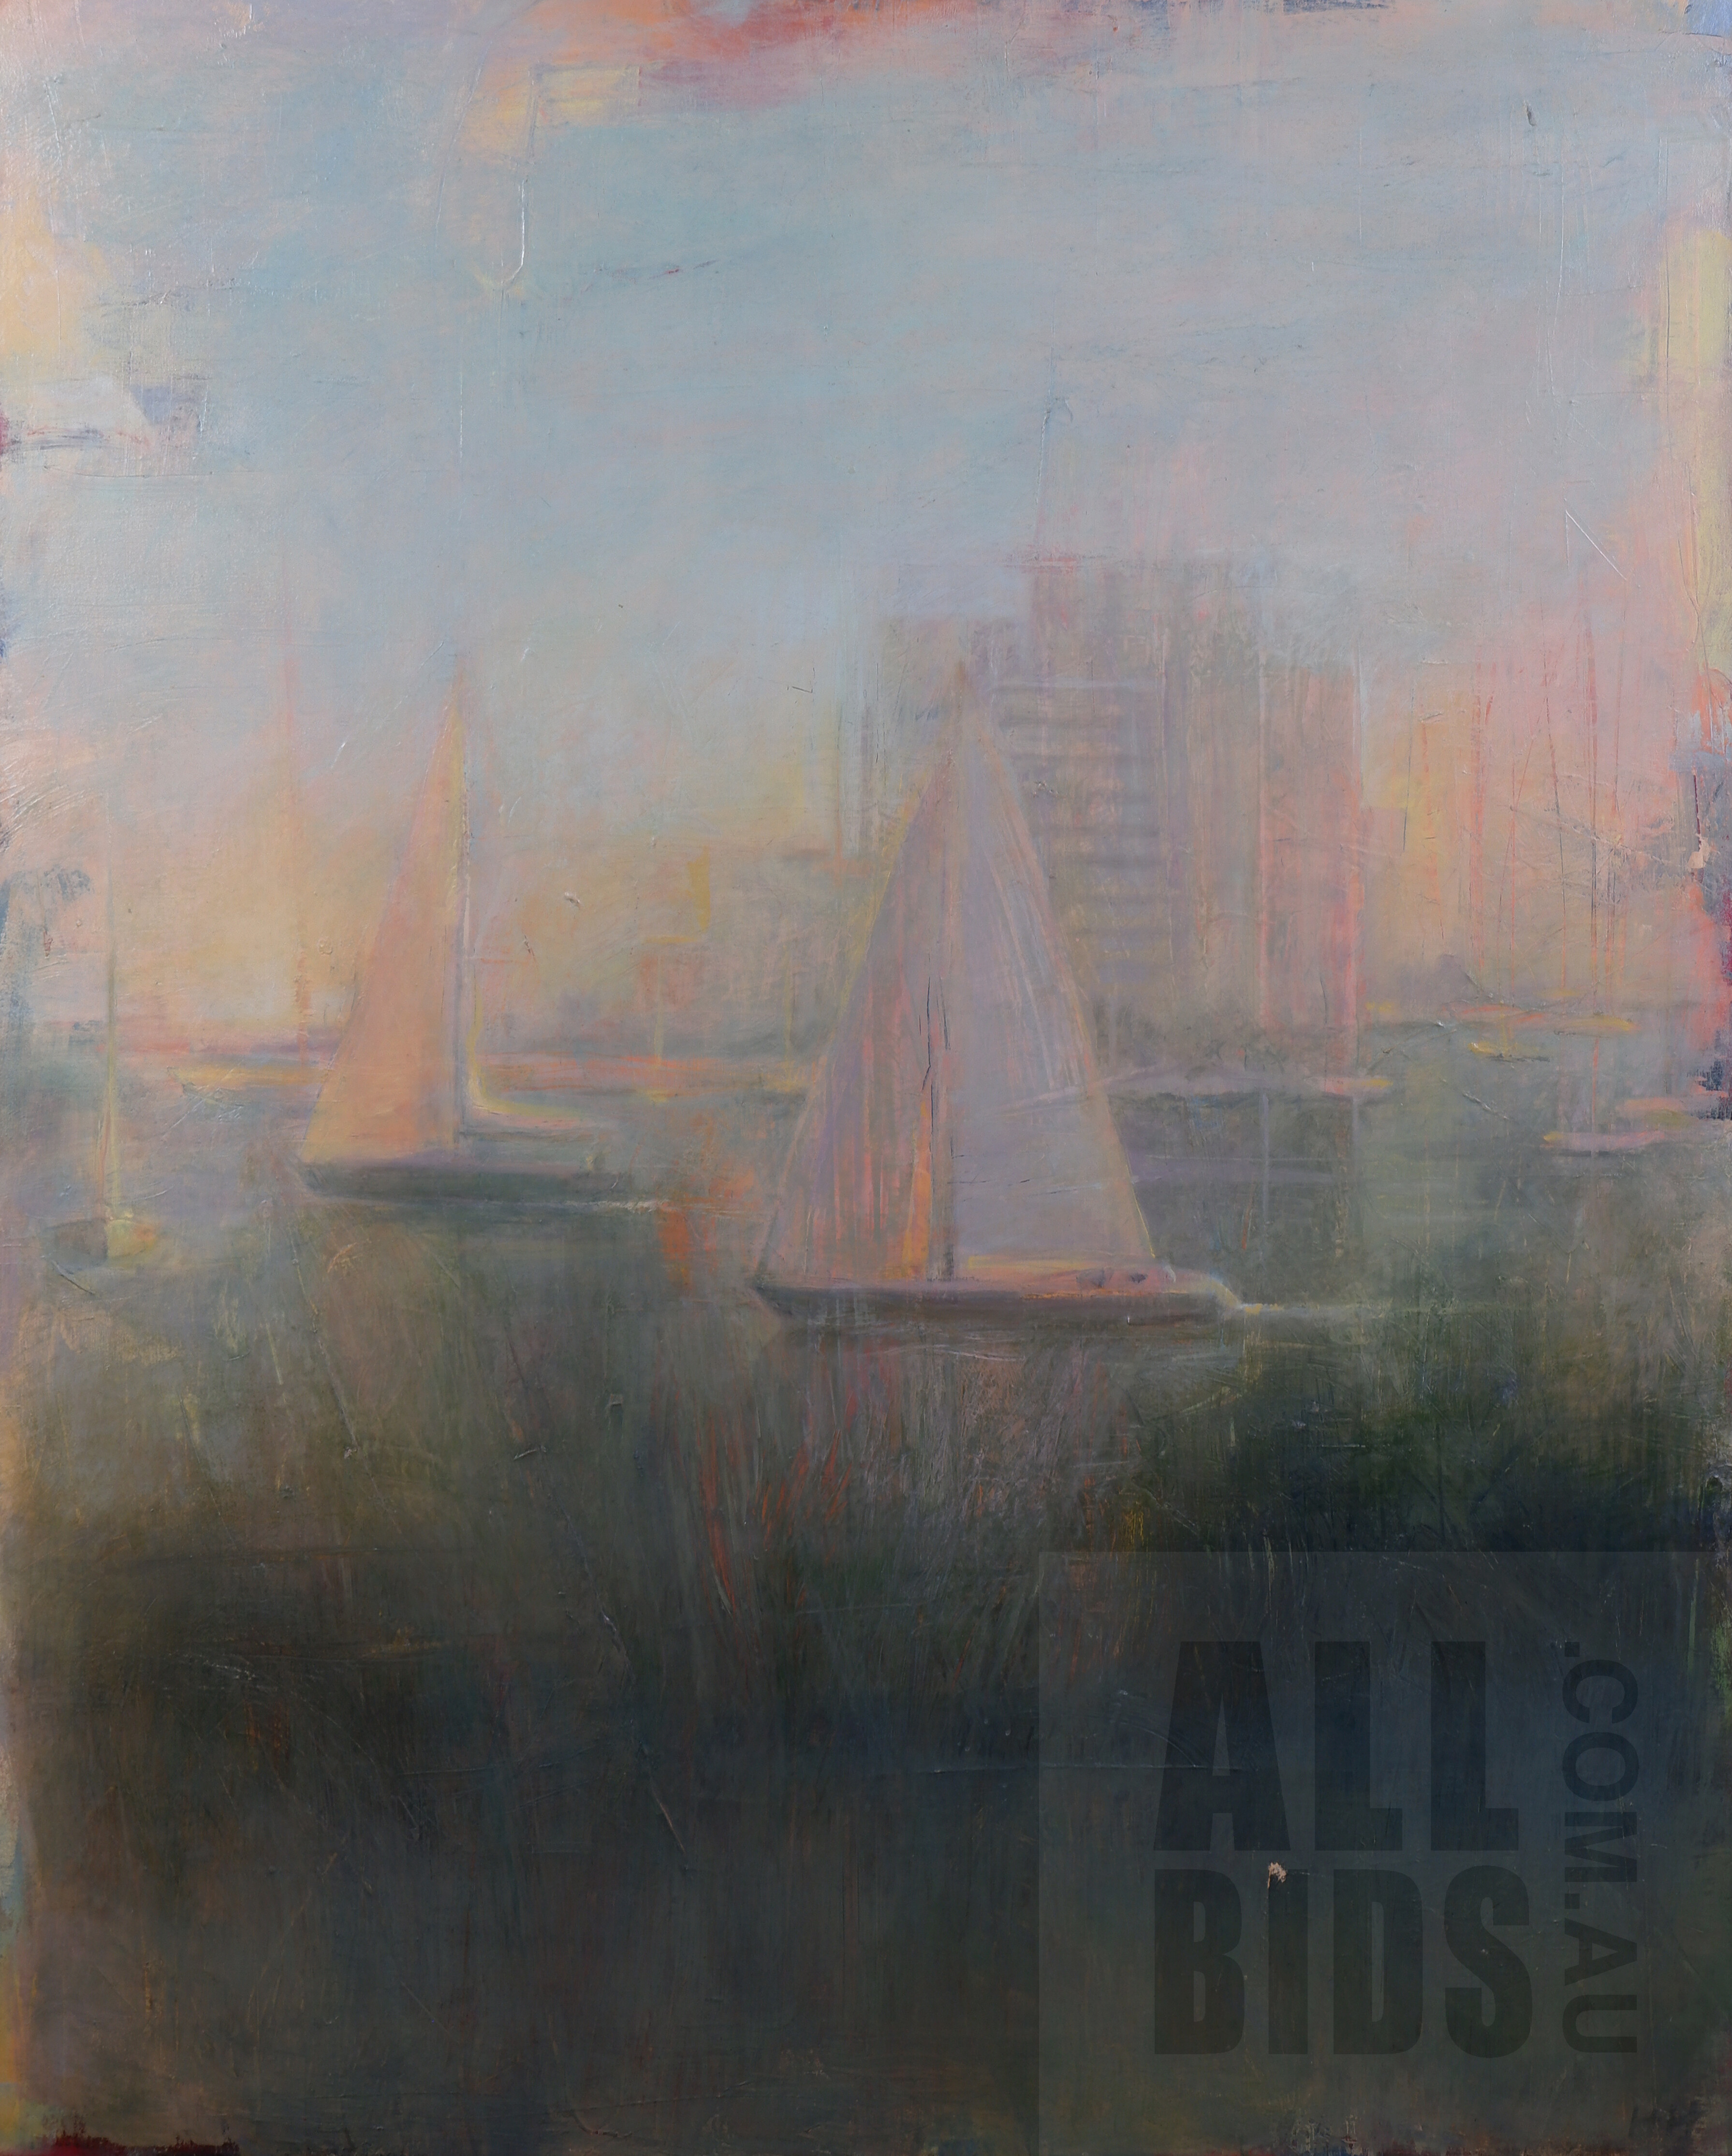 'Helen Halliday (20th Century), Elizabeth Bay, Oil on Canvas, 152 x 121 cm'